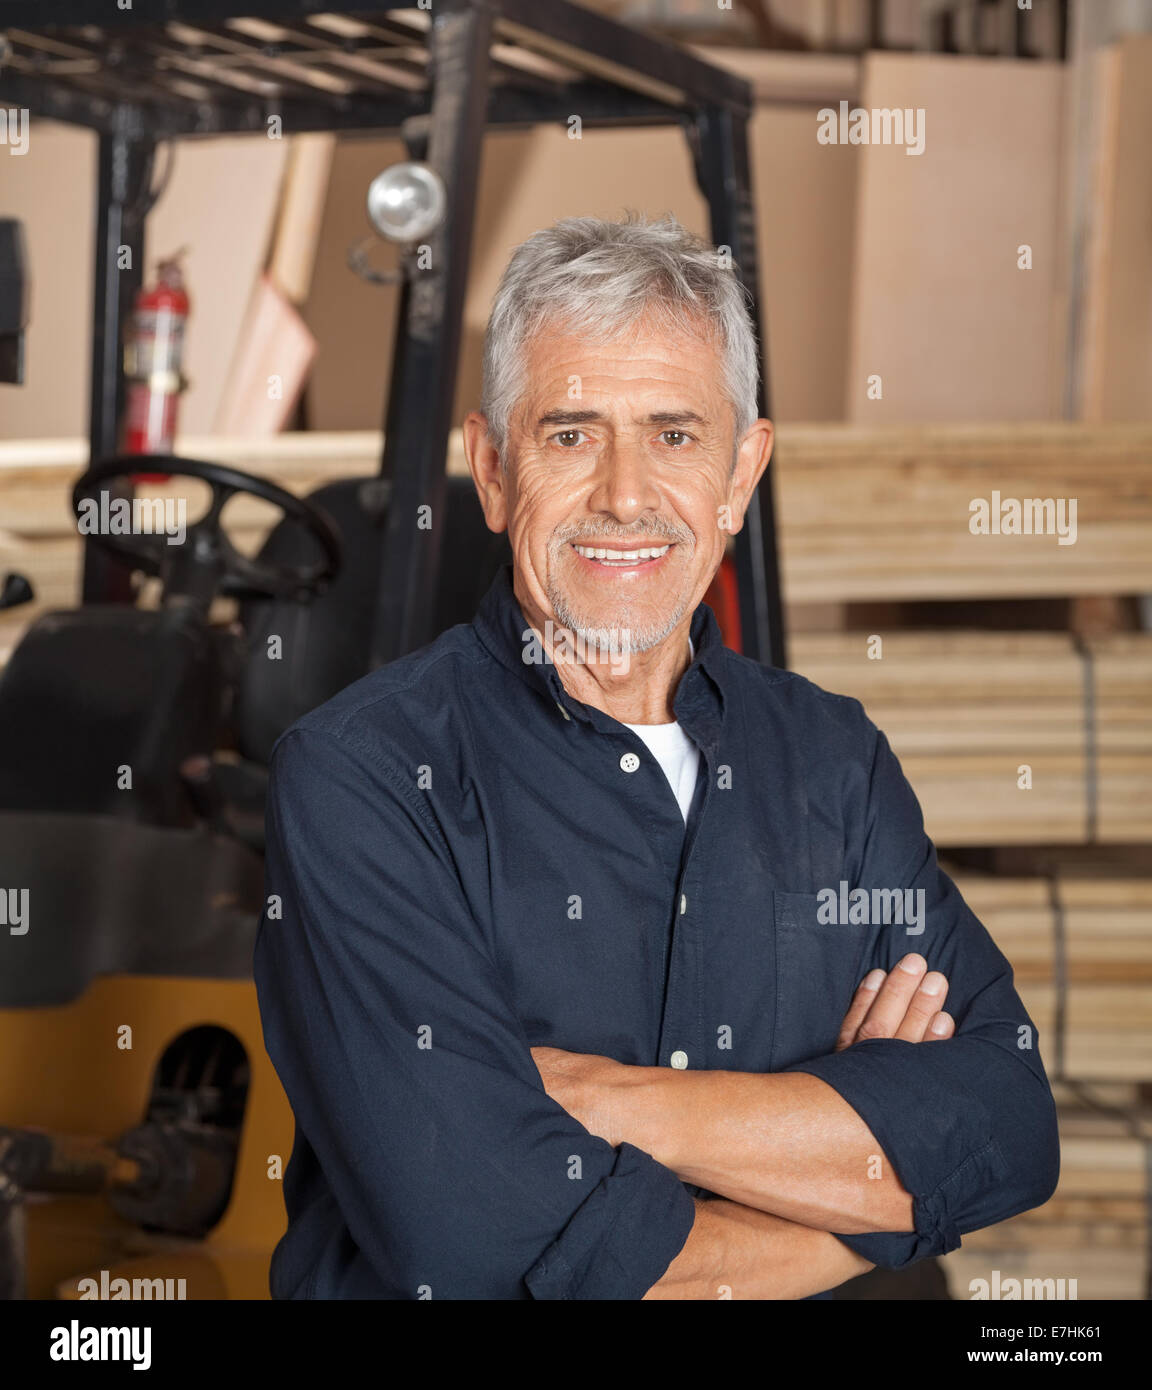 Confident Senior Carpenter With Arms Crossed Stock Photo